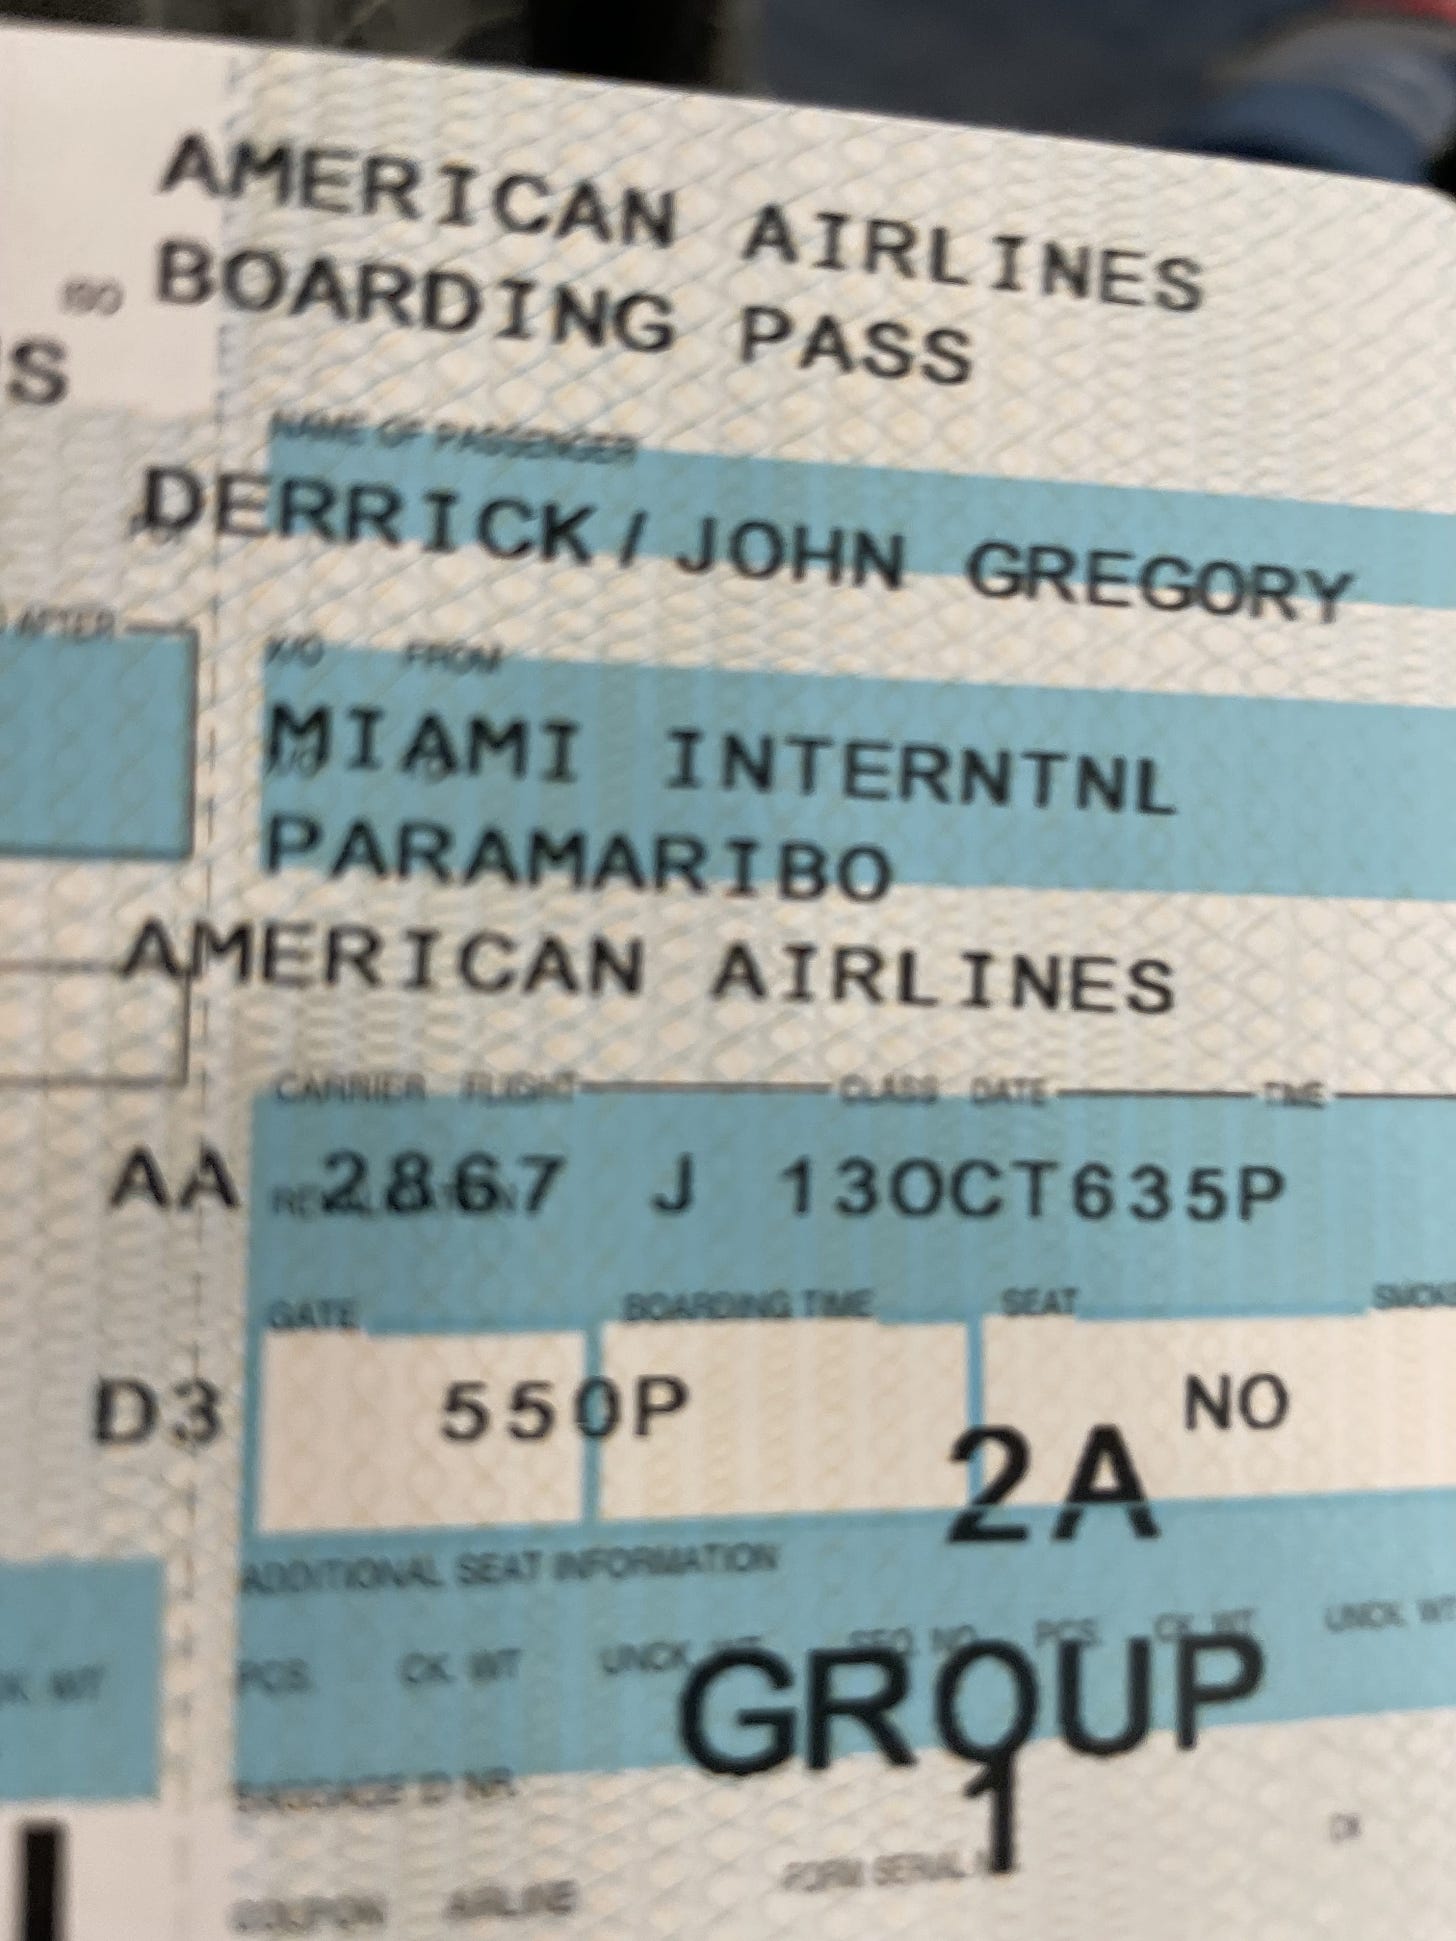 American Airlines Paramaribo boarding pass